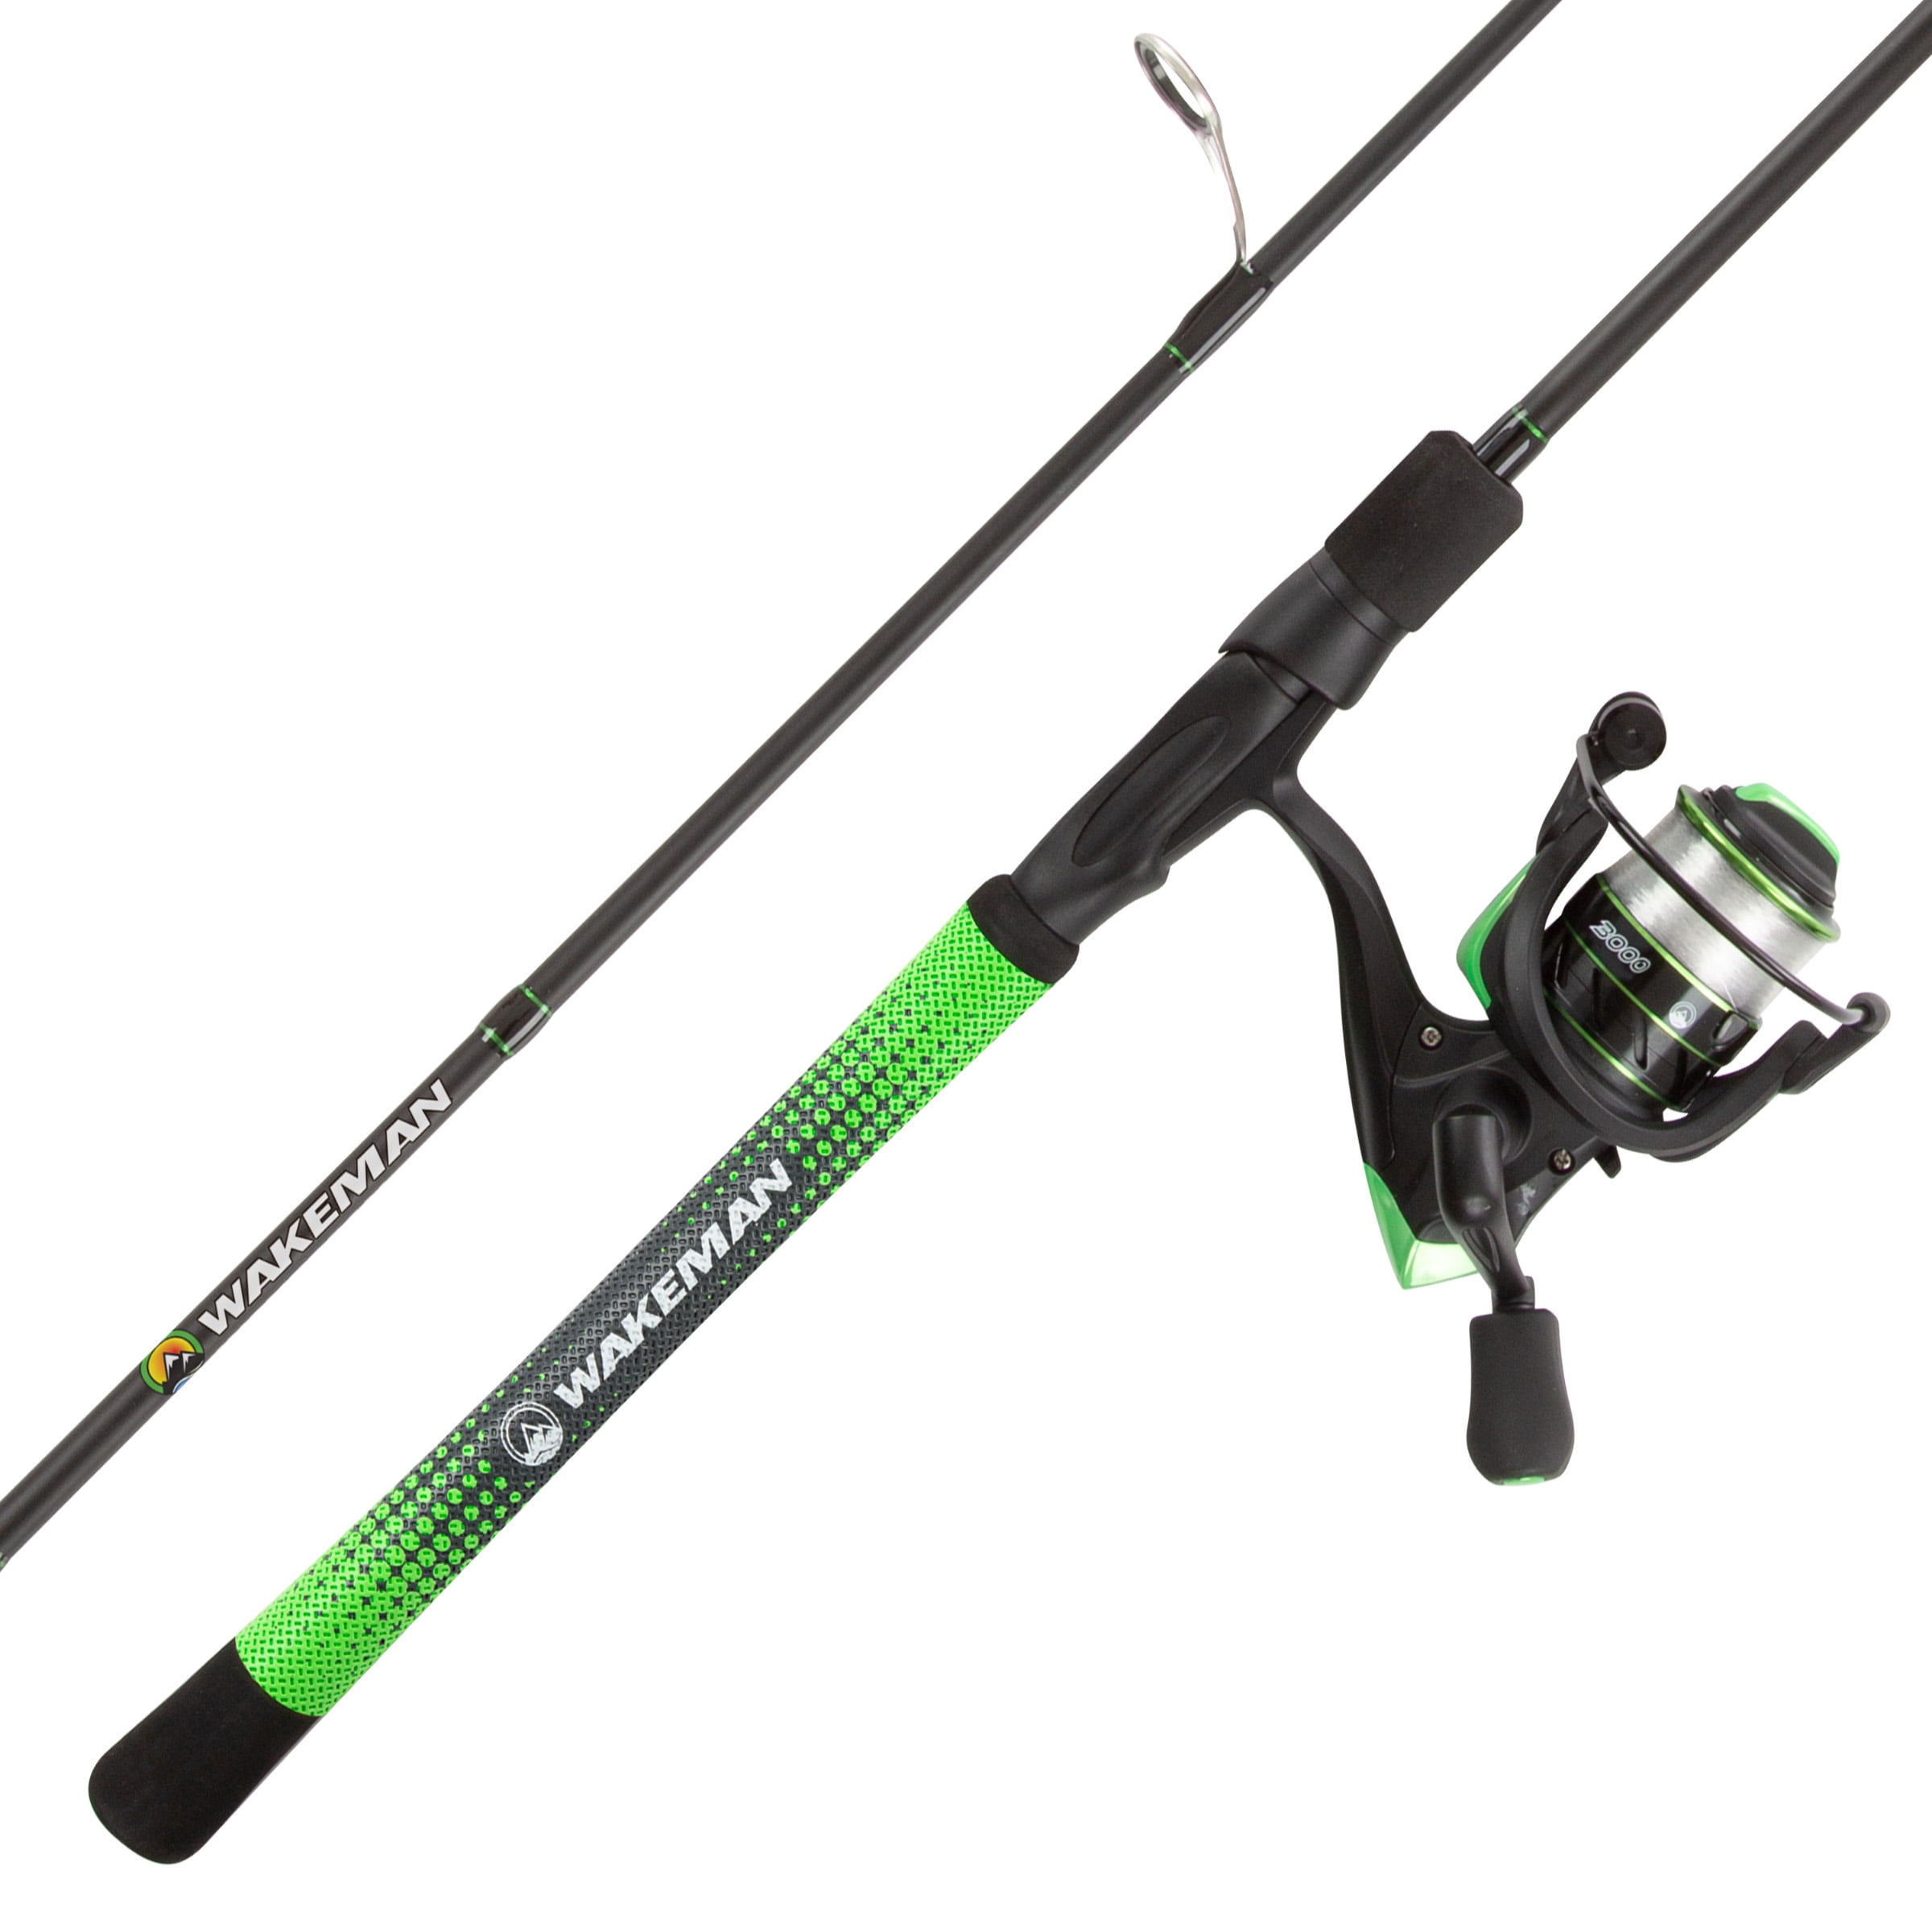 Wakeman Fishing Rod and Reel Combo for Bass, Salmon, or Catfish, Green